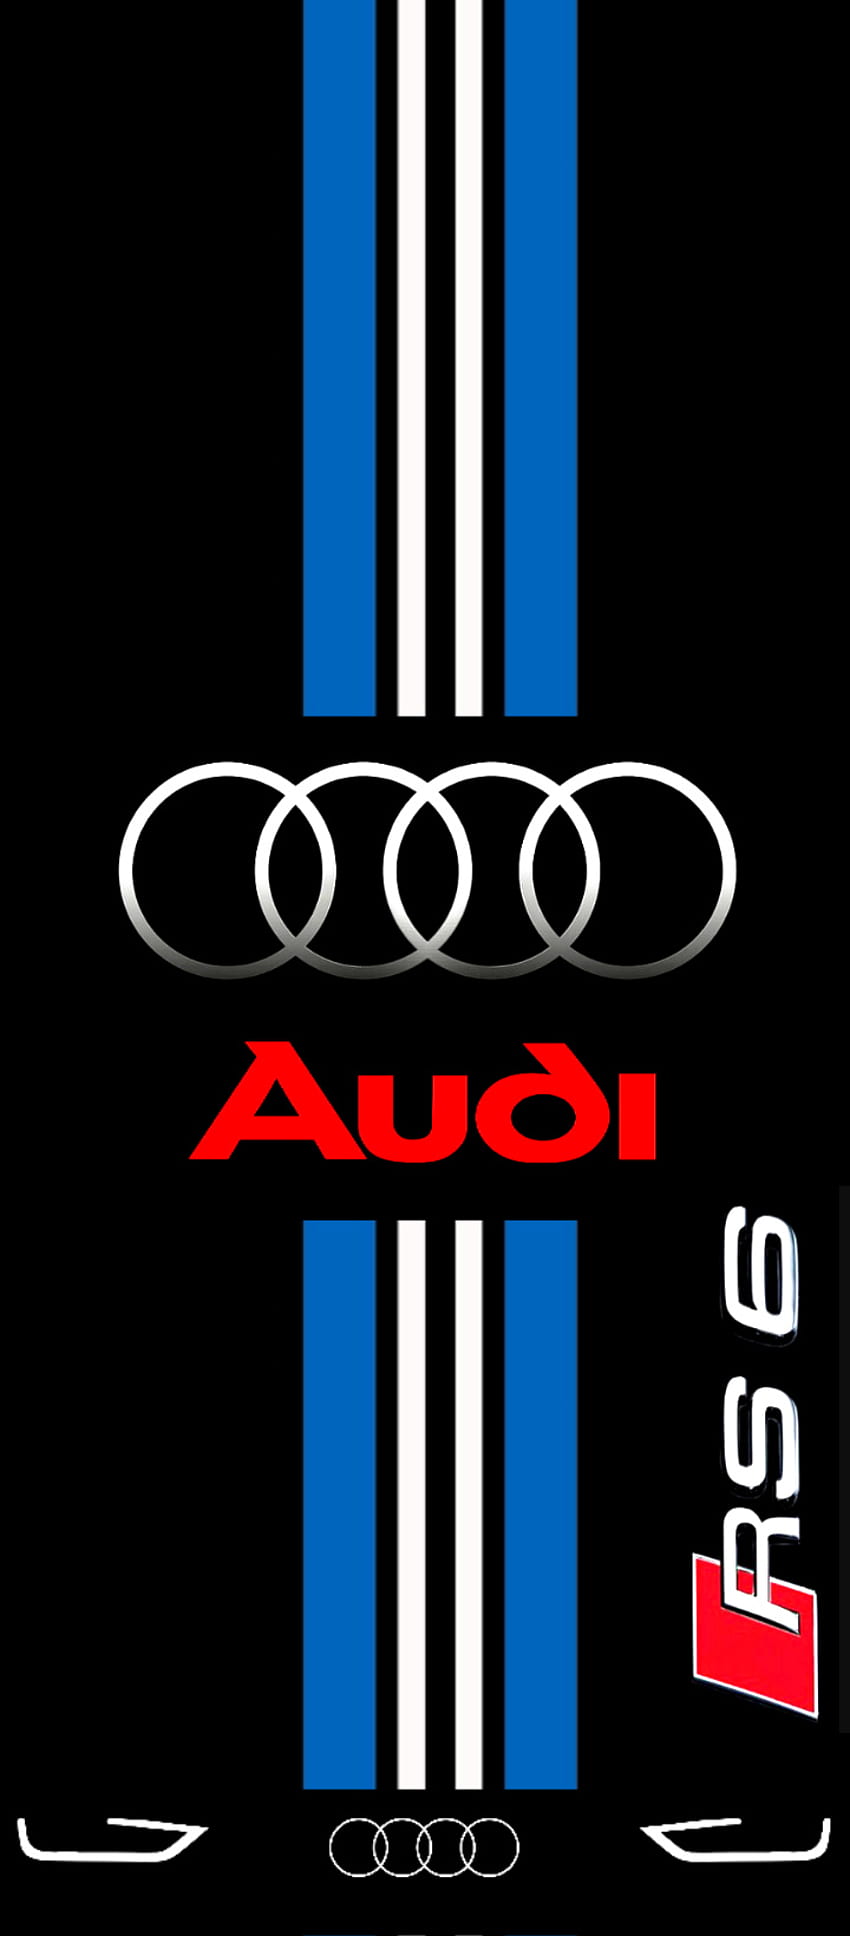 File:Audi.png - Wikimedia Commons